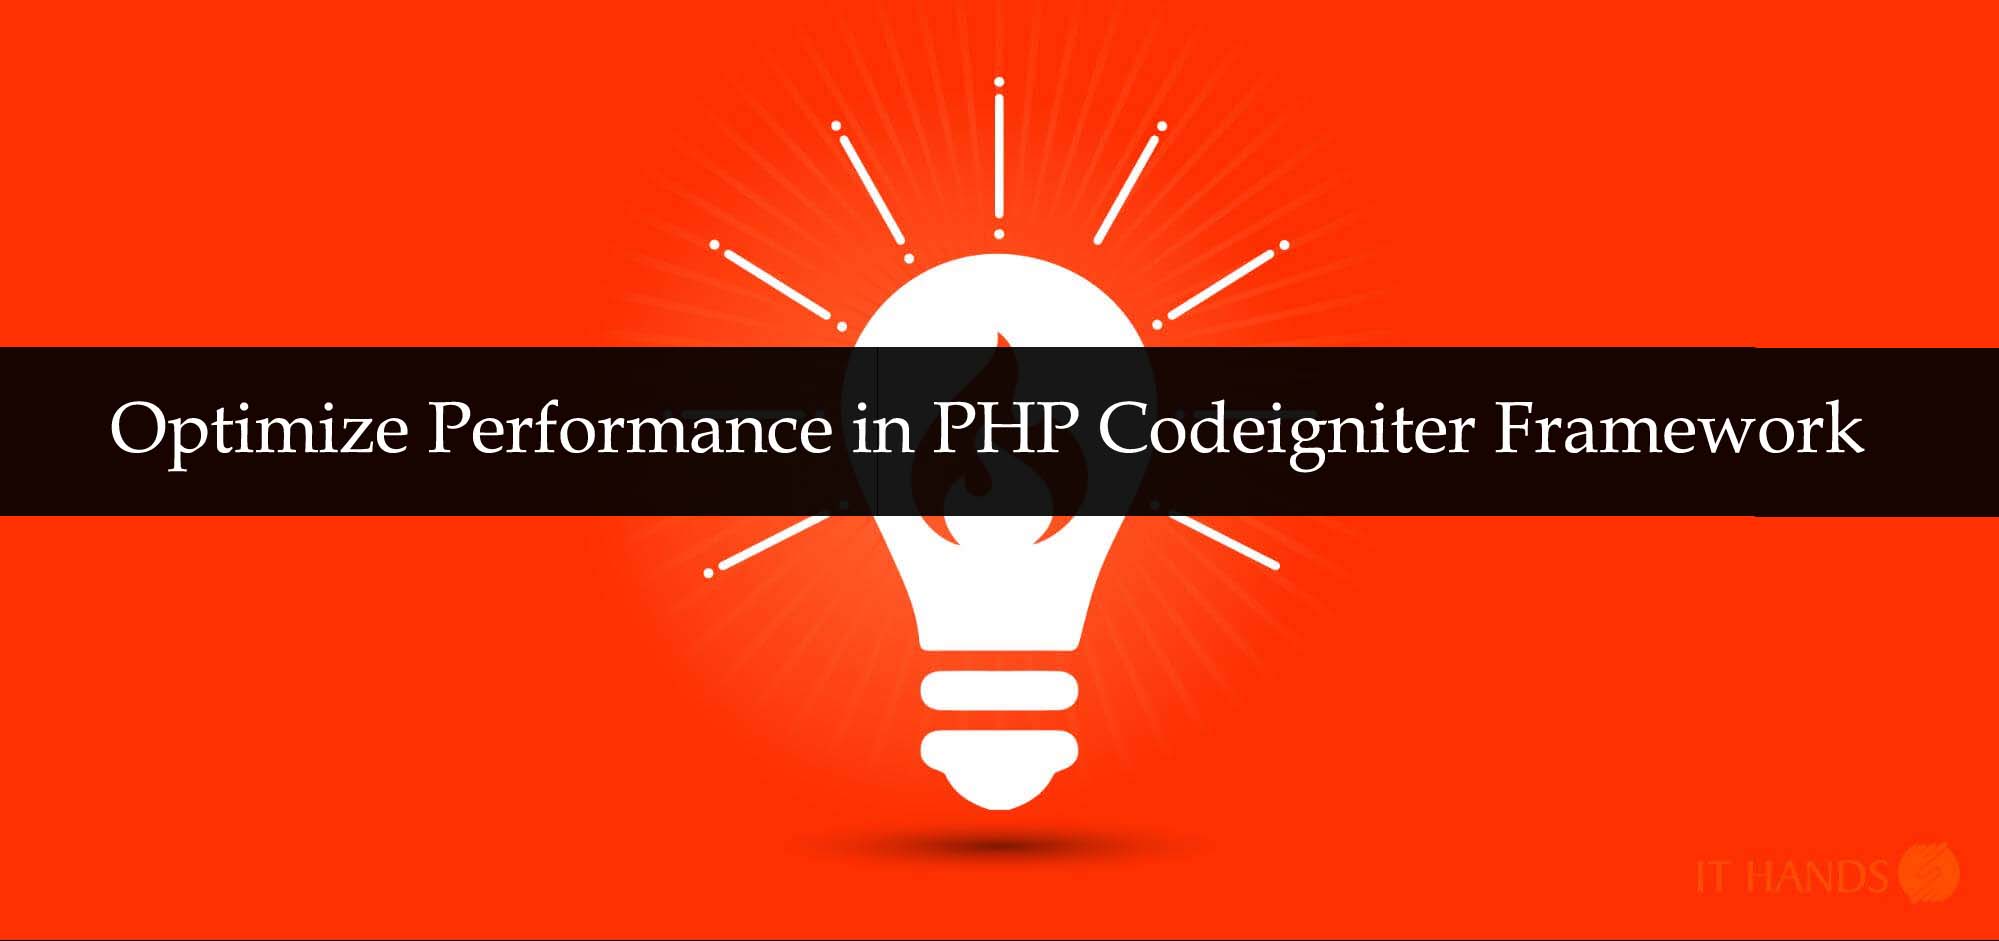 Optimize Performance in PHP Codeigniter Framework